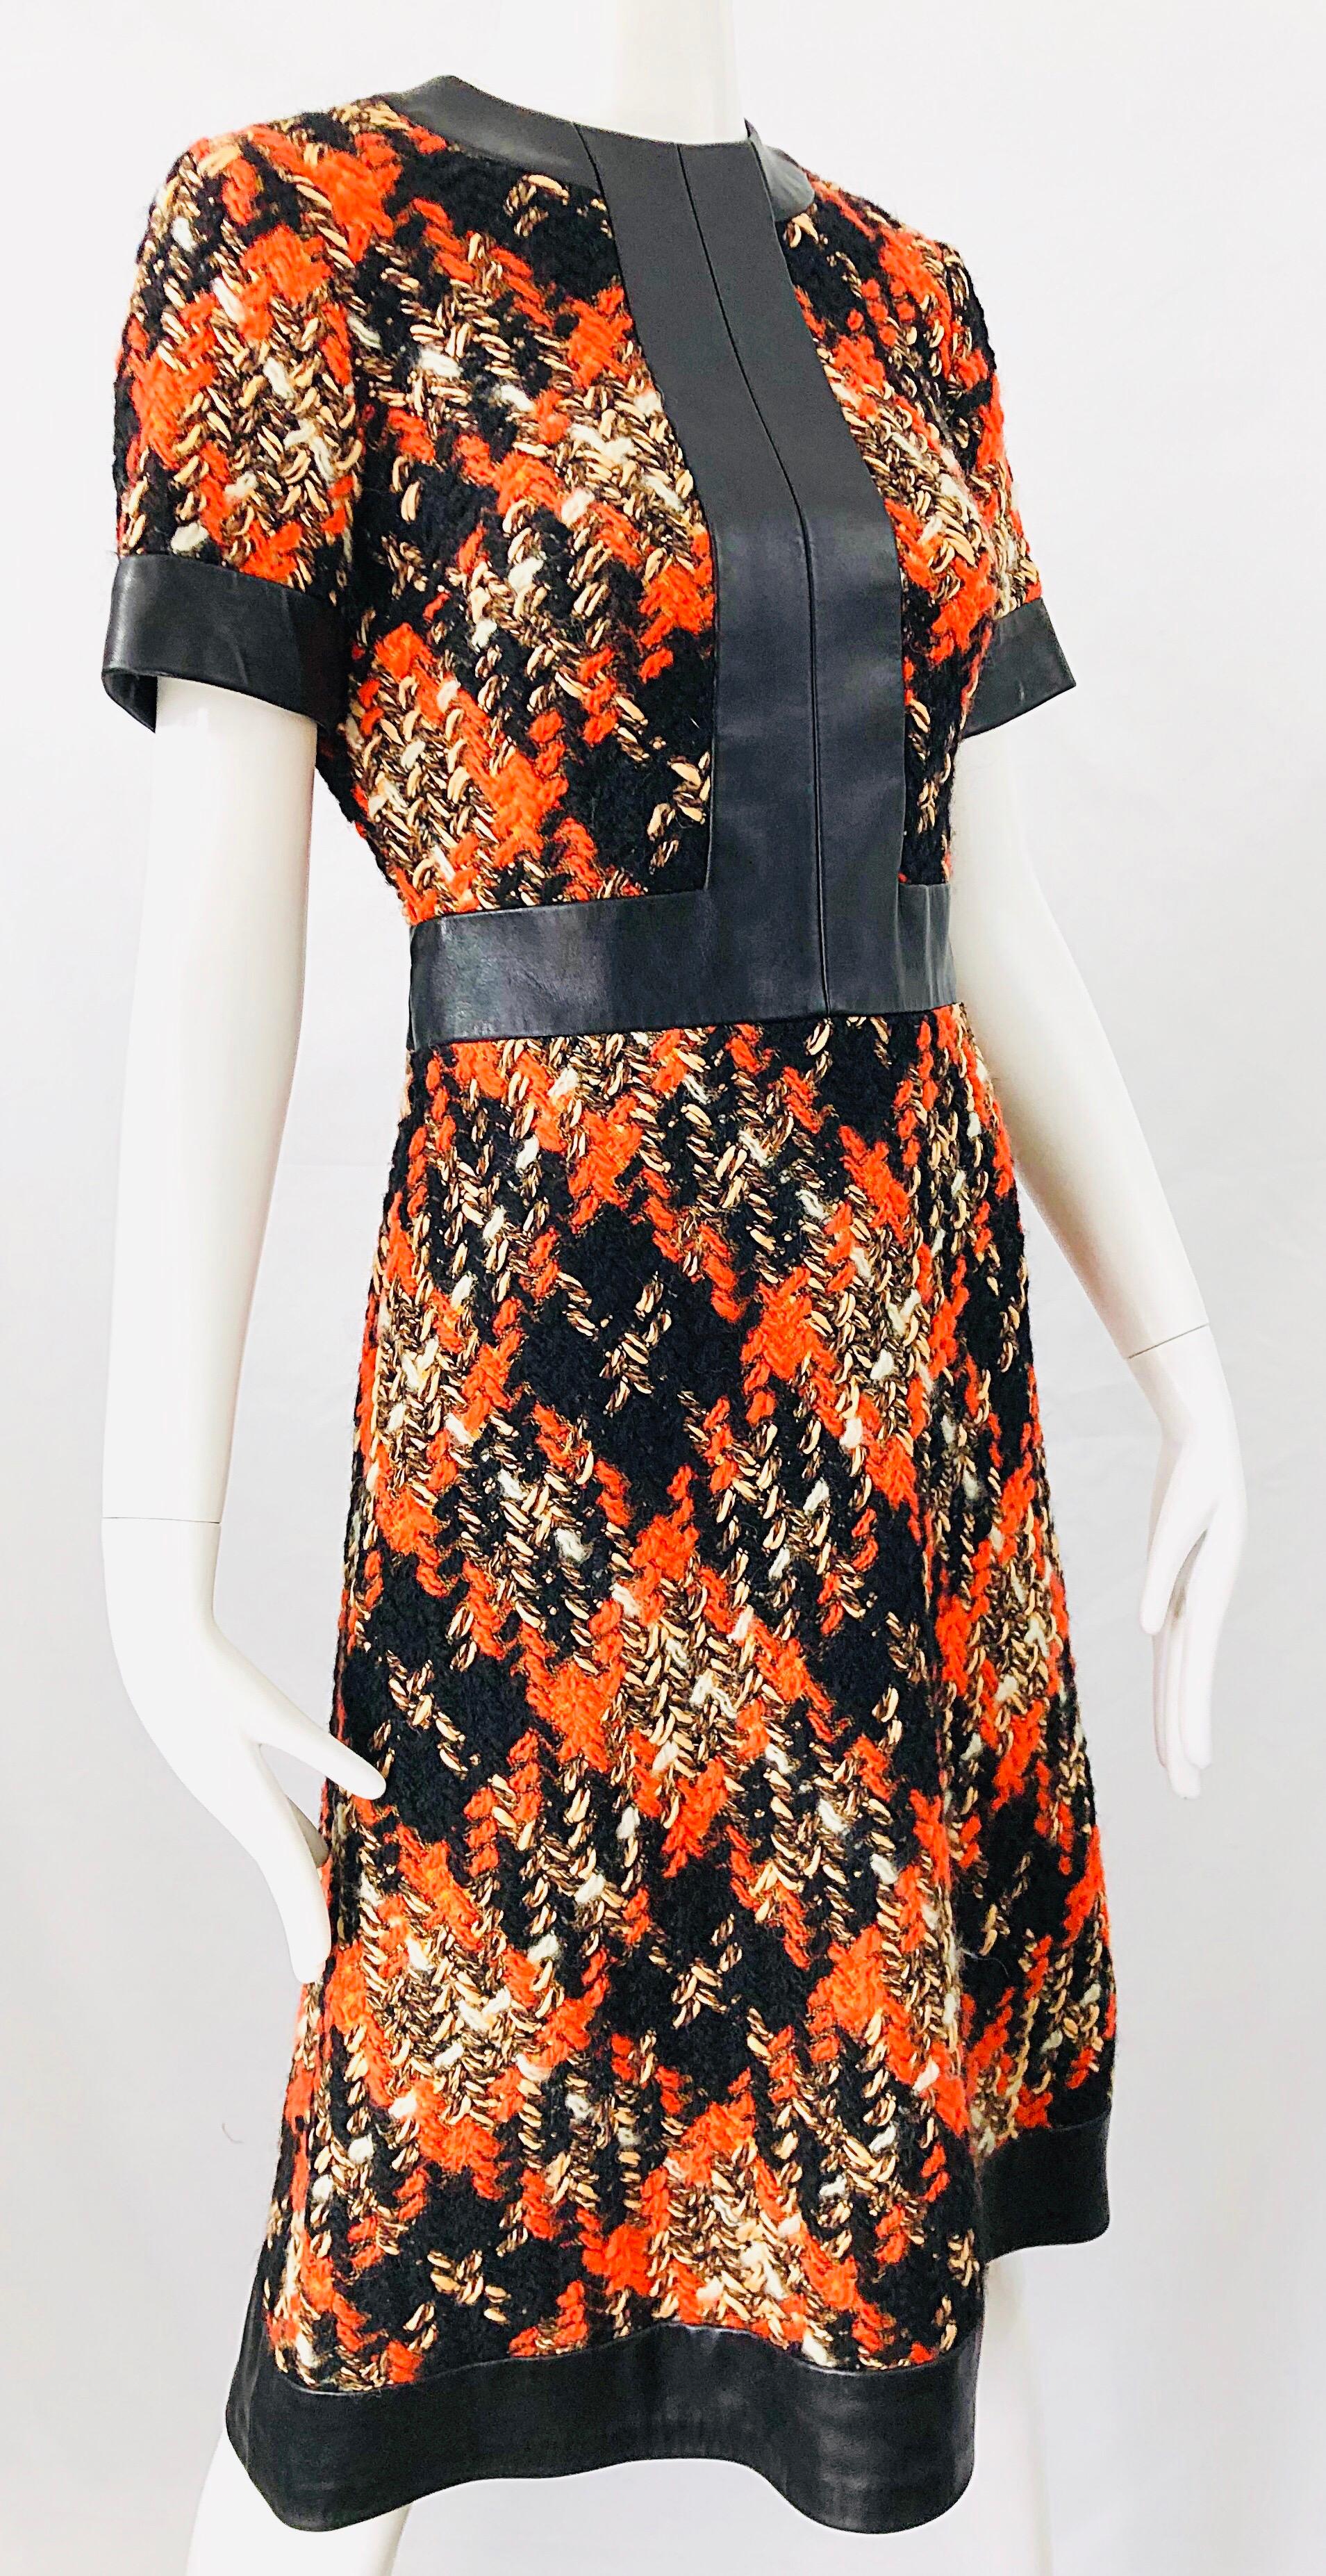 Black 1960s Louis Feraud Haute Couture Boucle Wool + Leather Orange A - Line 60s Dress For Sale